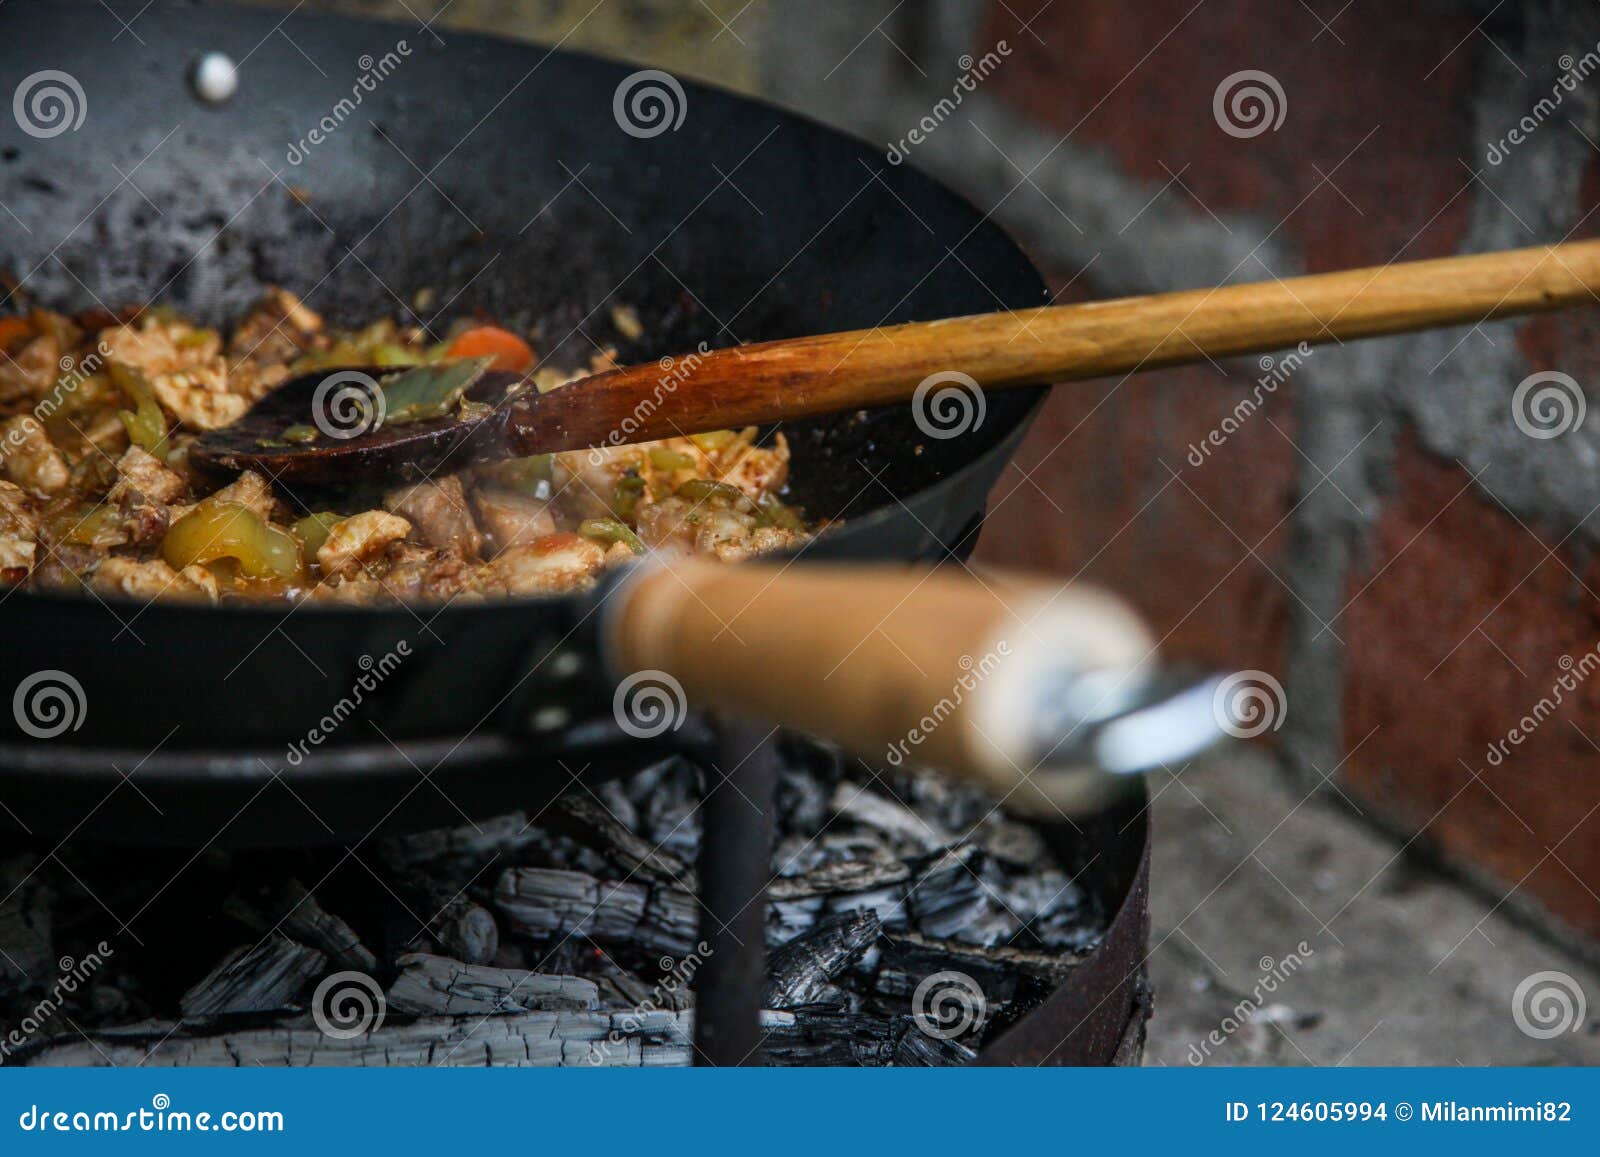 the cook prepares food in natur